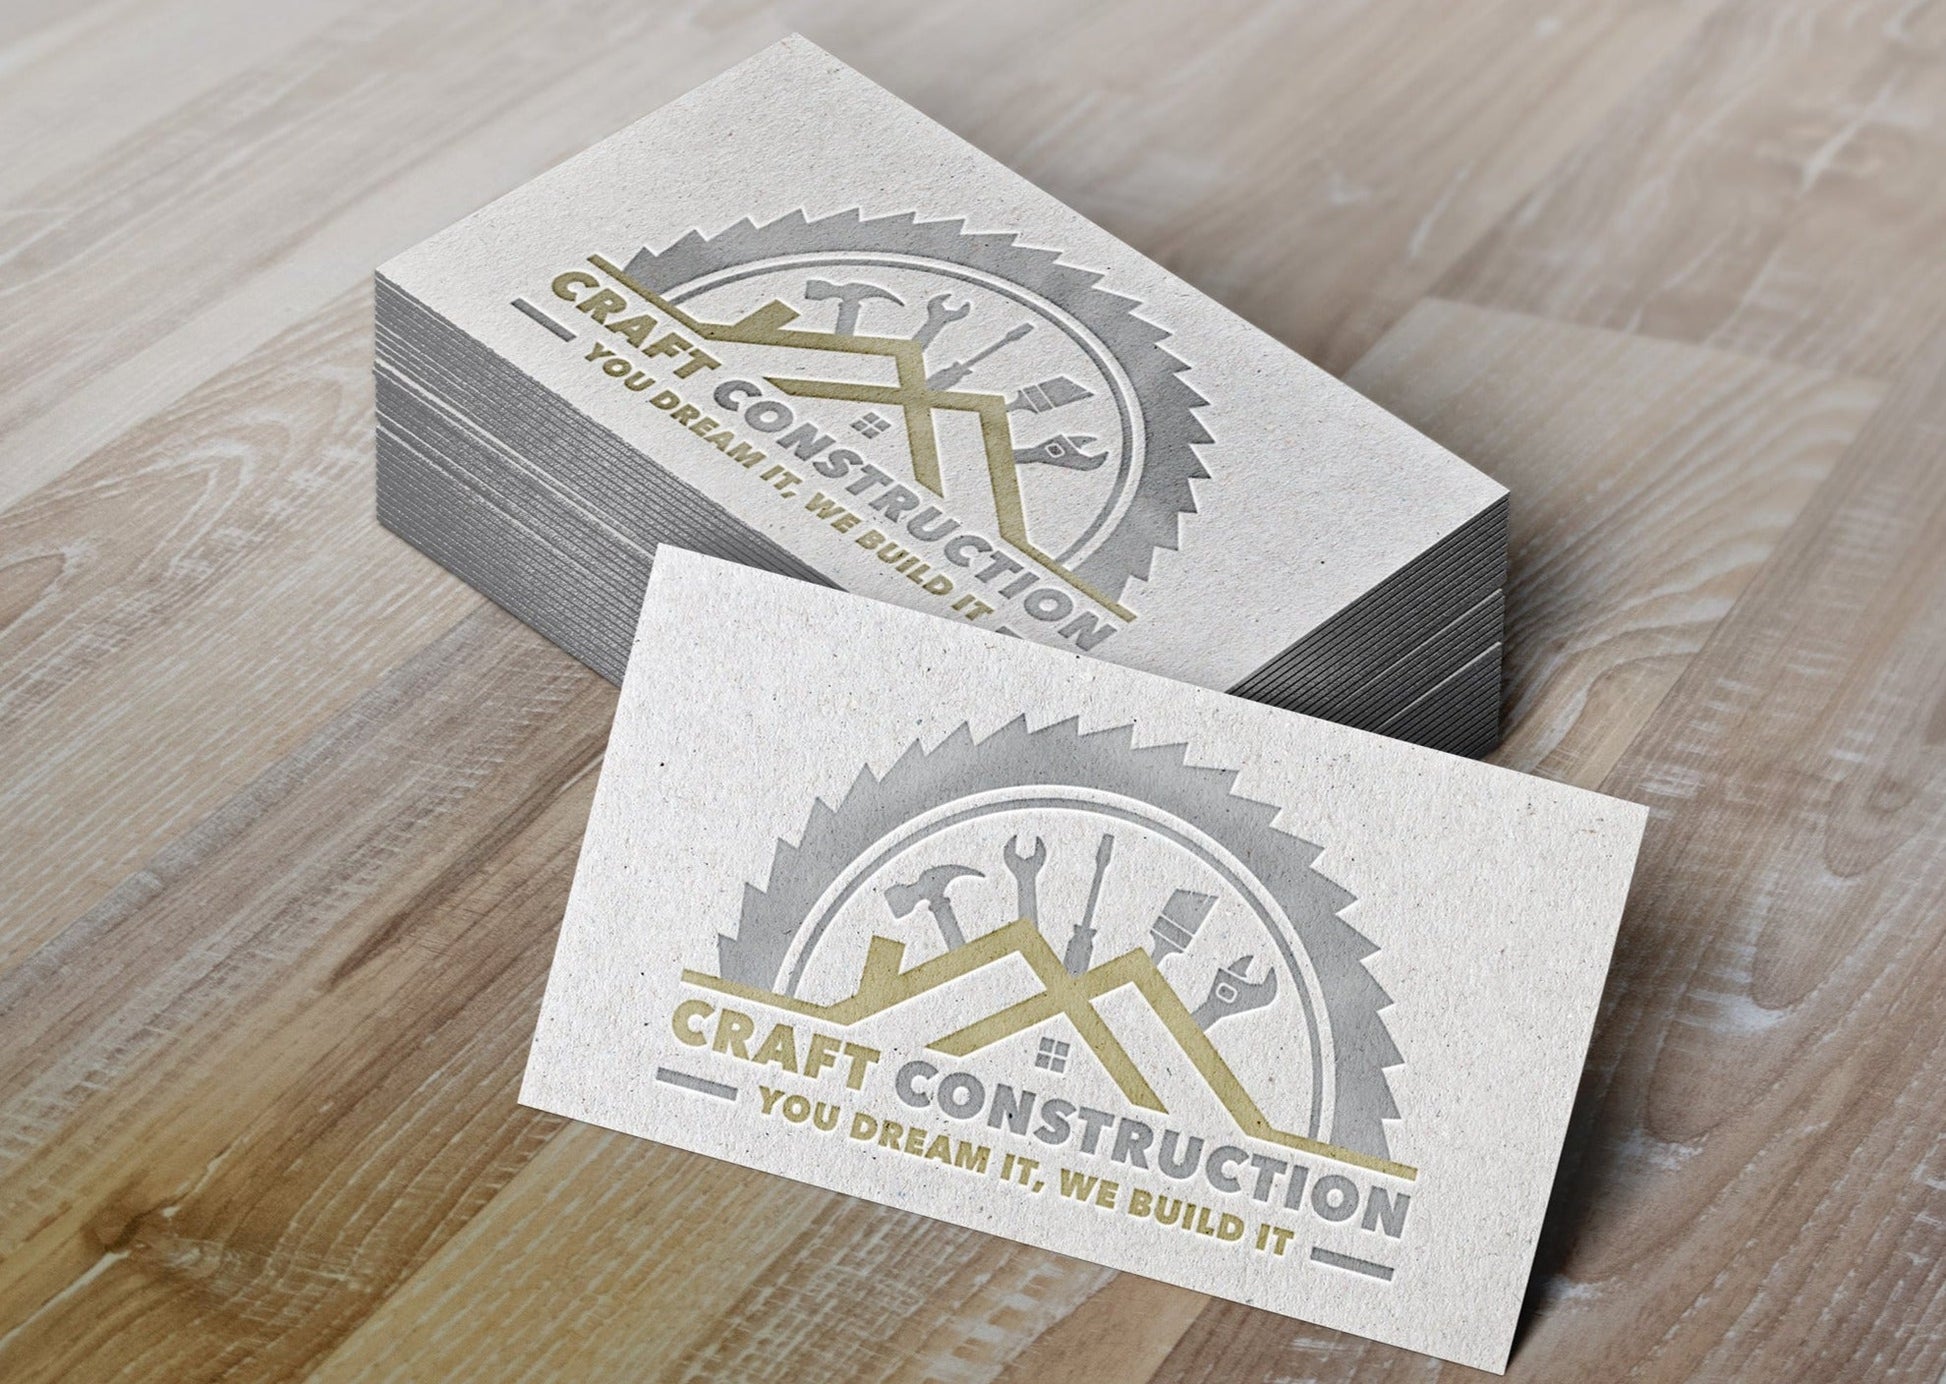 Construction Logo Design | Construction Company Logo | Home Remodeling Business Logo | Home Repair Services | Handyman Logo | Hammer Logo